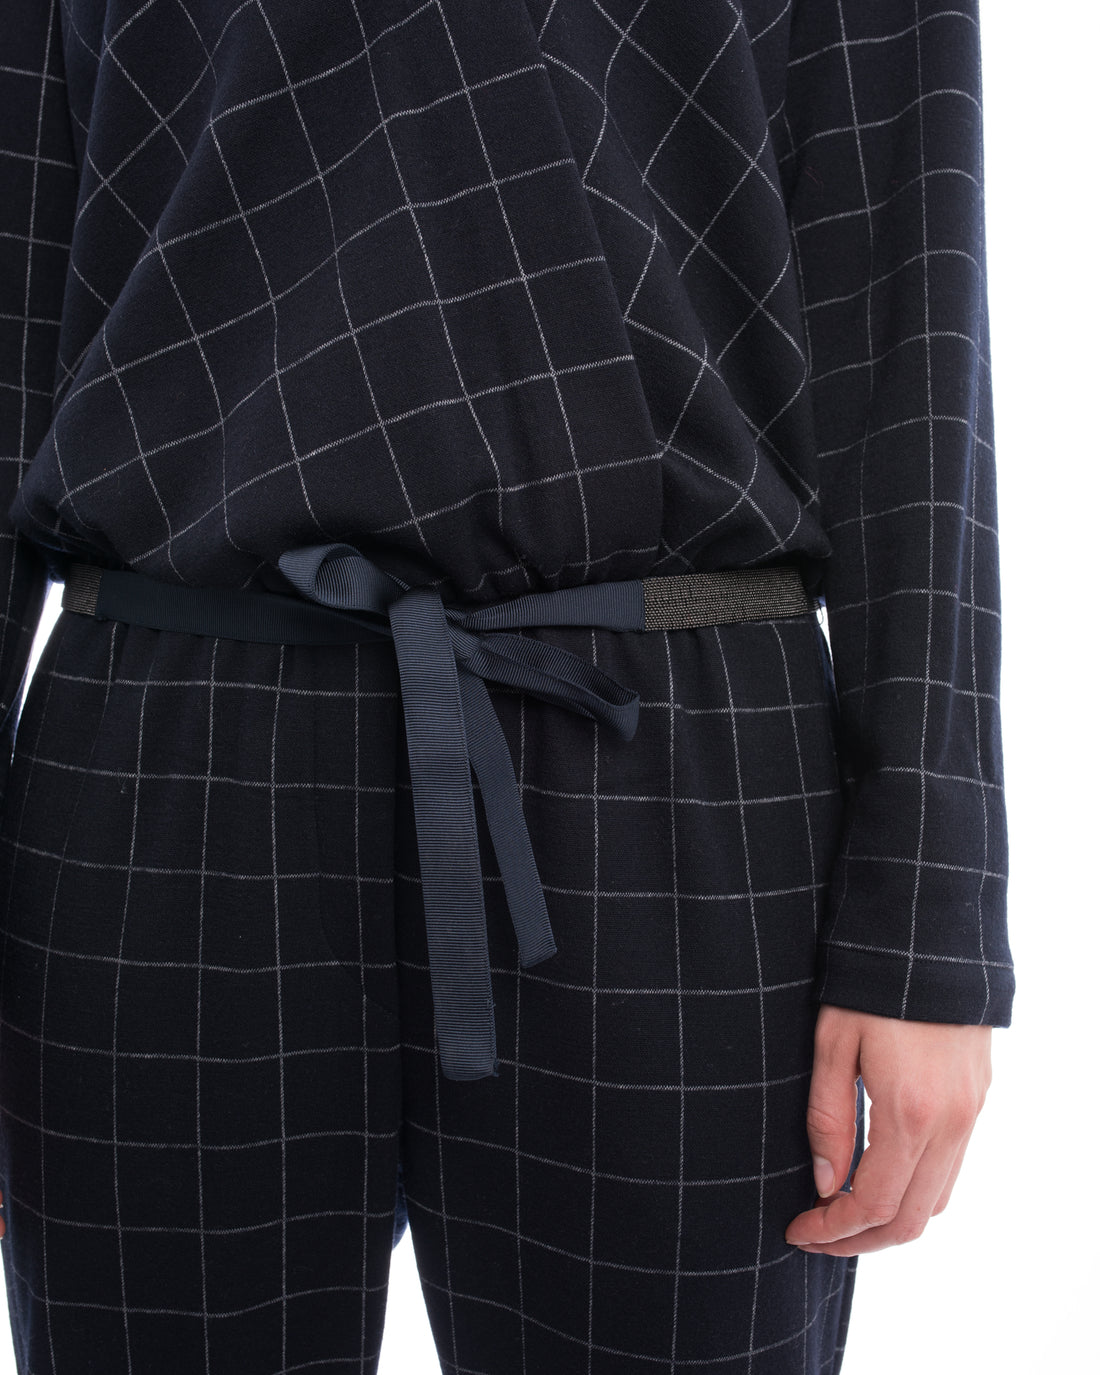 Brunello Cucinelli Navy Wool Check Jumpsuit with Grey Cuffs - M